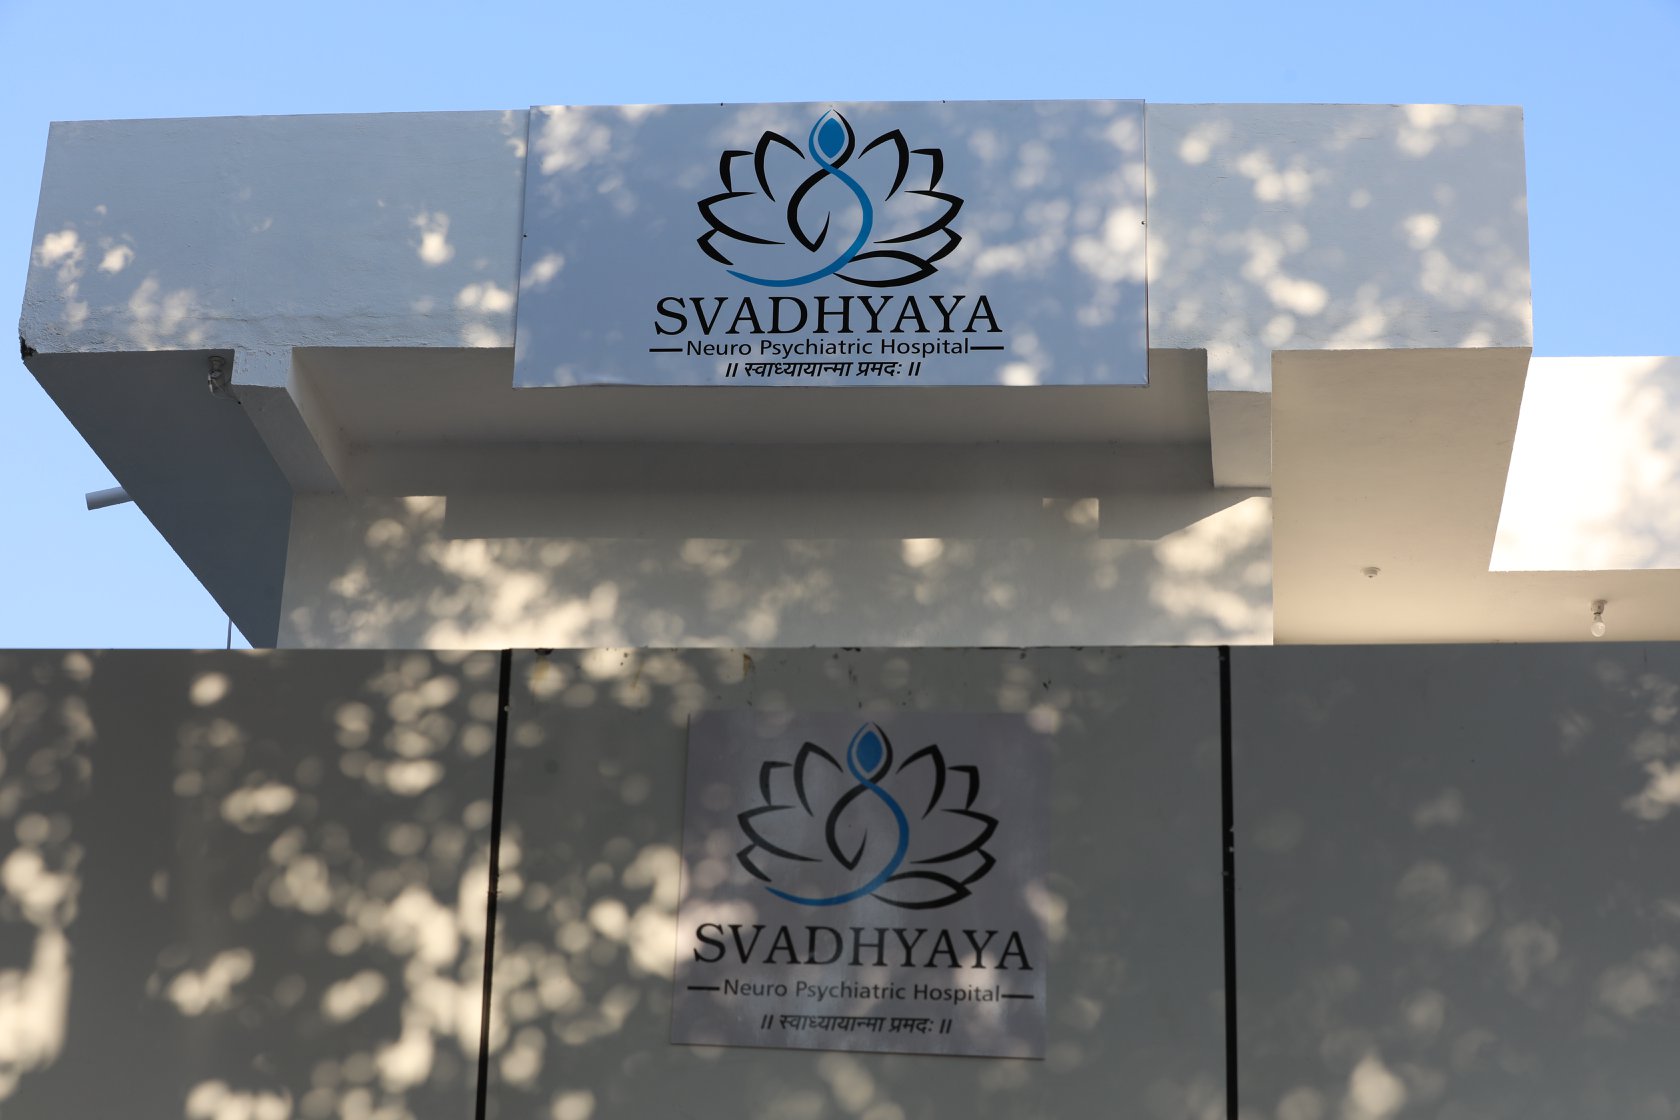 Svadhyaya Neuropsychiatric Hospital - AB Road, Indore